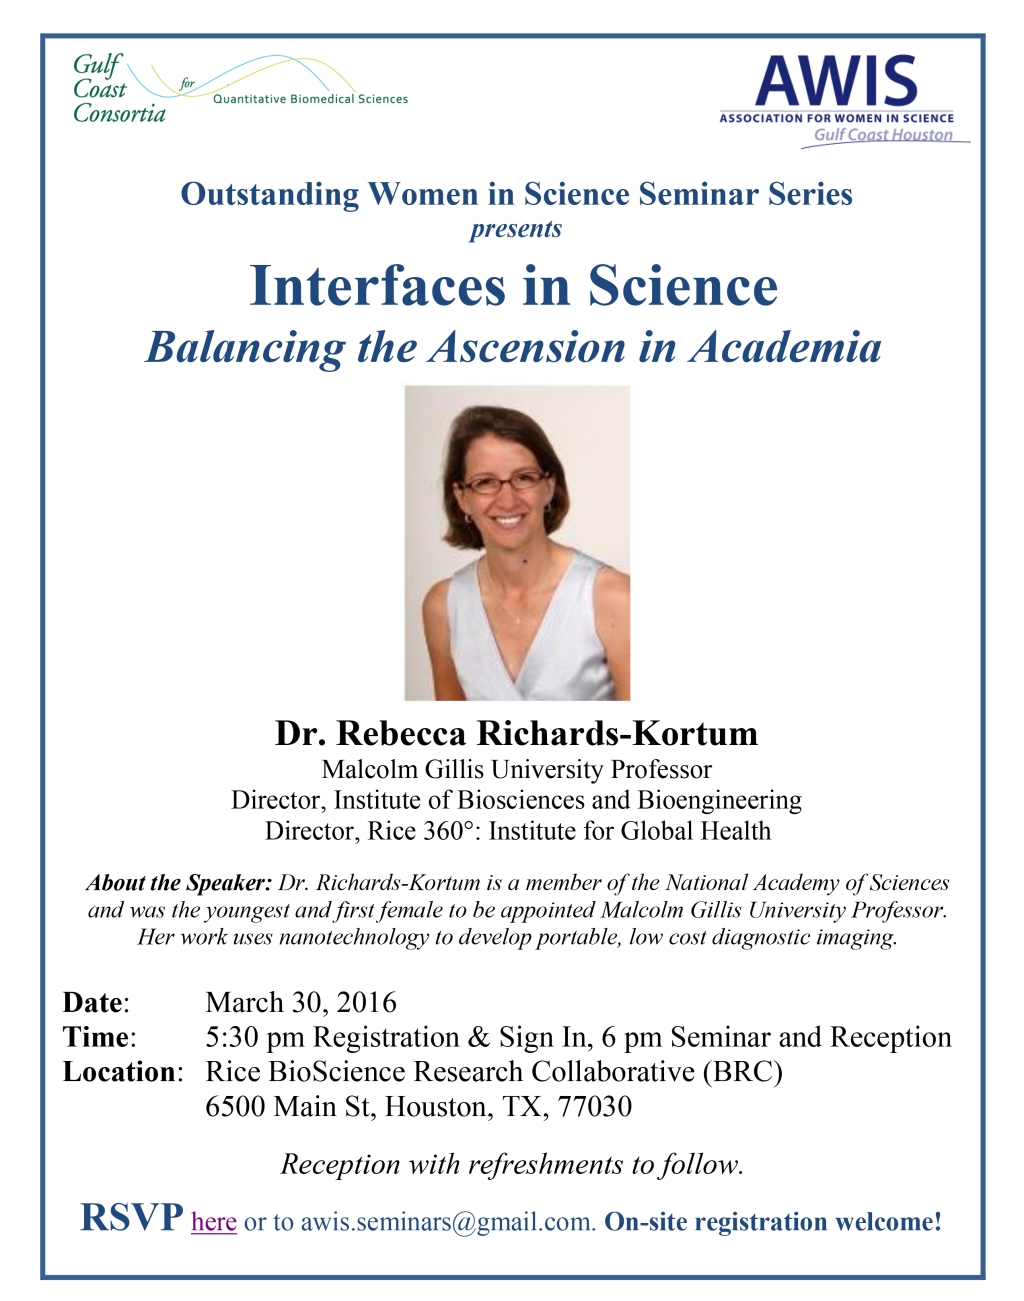 March 30: Dr. Rebecca Richards-Kortum